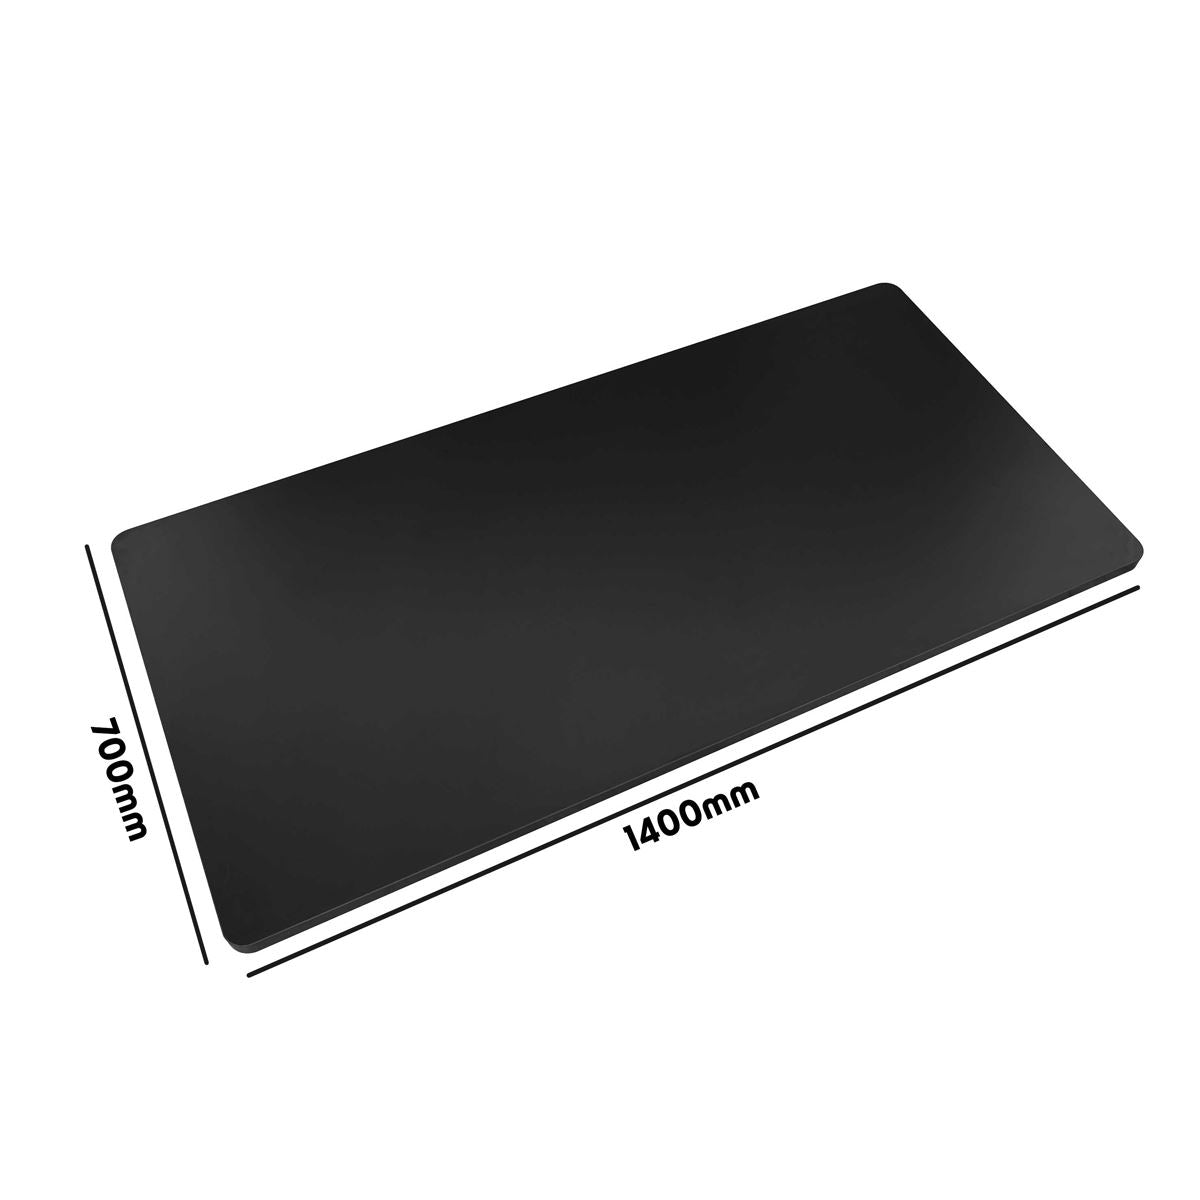 Dellonda Black Rectangular Desktop 1400 x 700mm, 1" Thickness - DH21